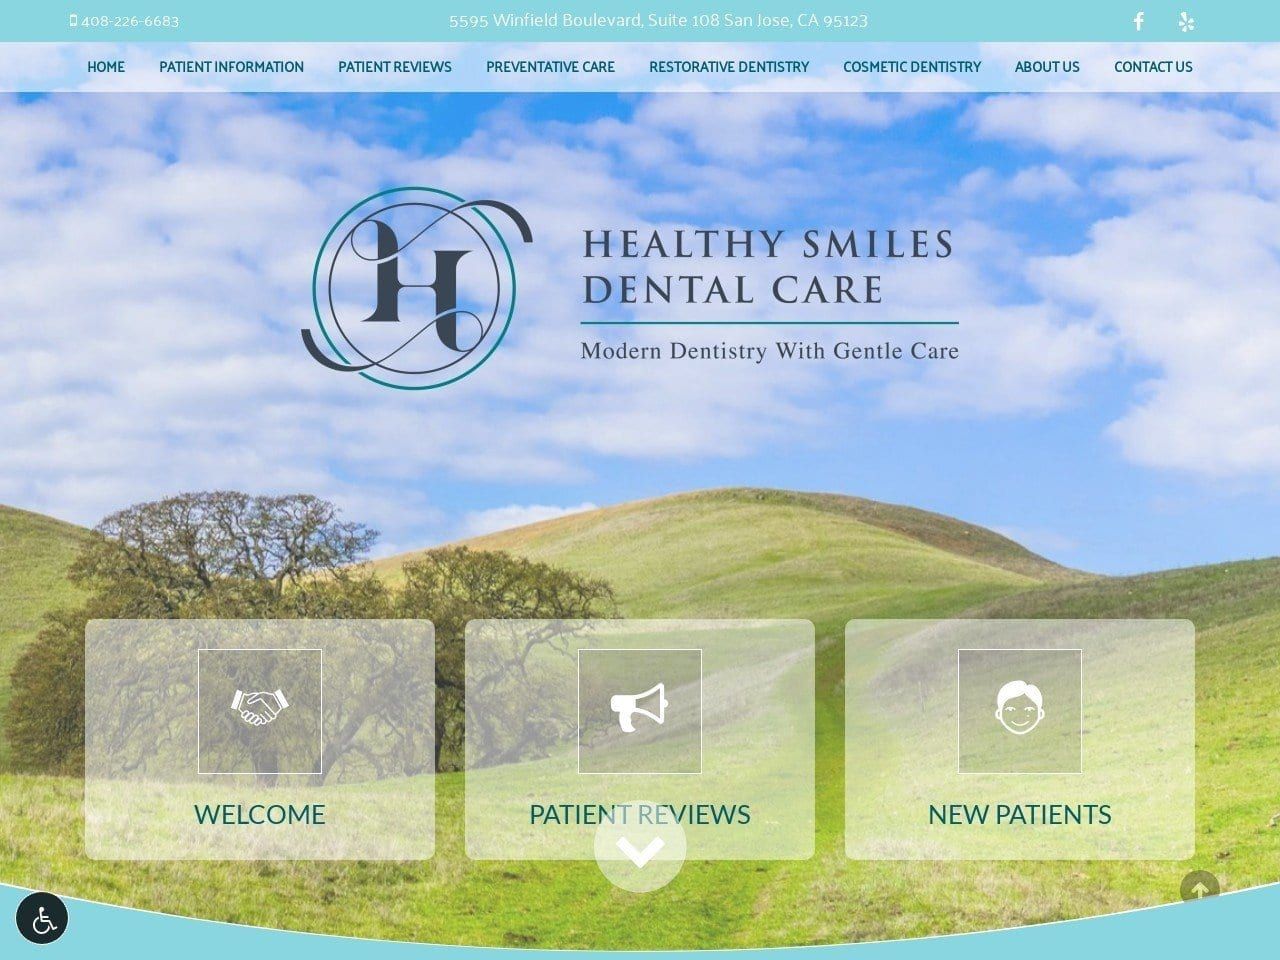 Healthy Smiles Dental Care Website Screenshot from ihealthysmiles.com